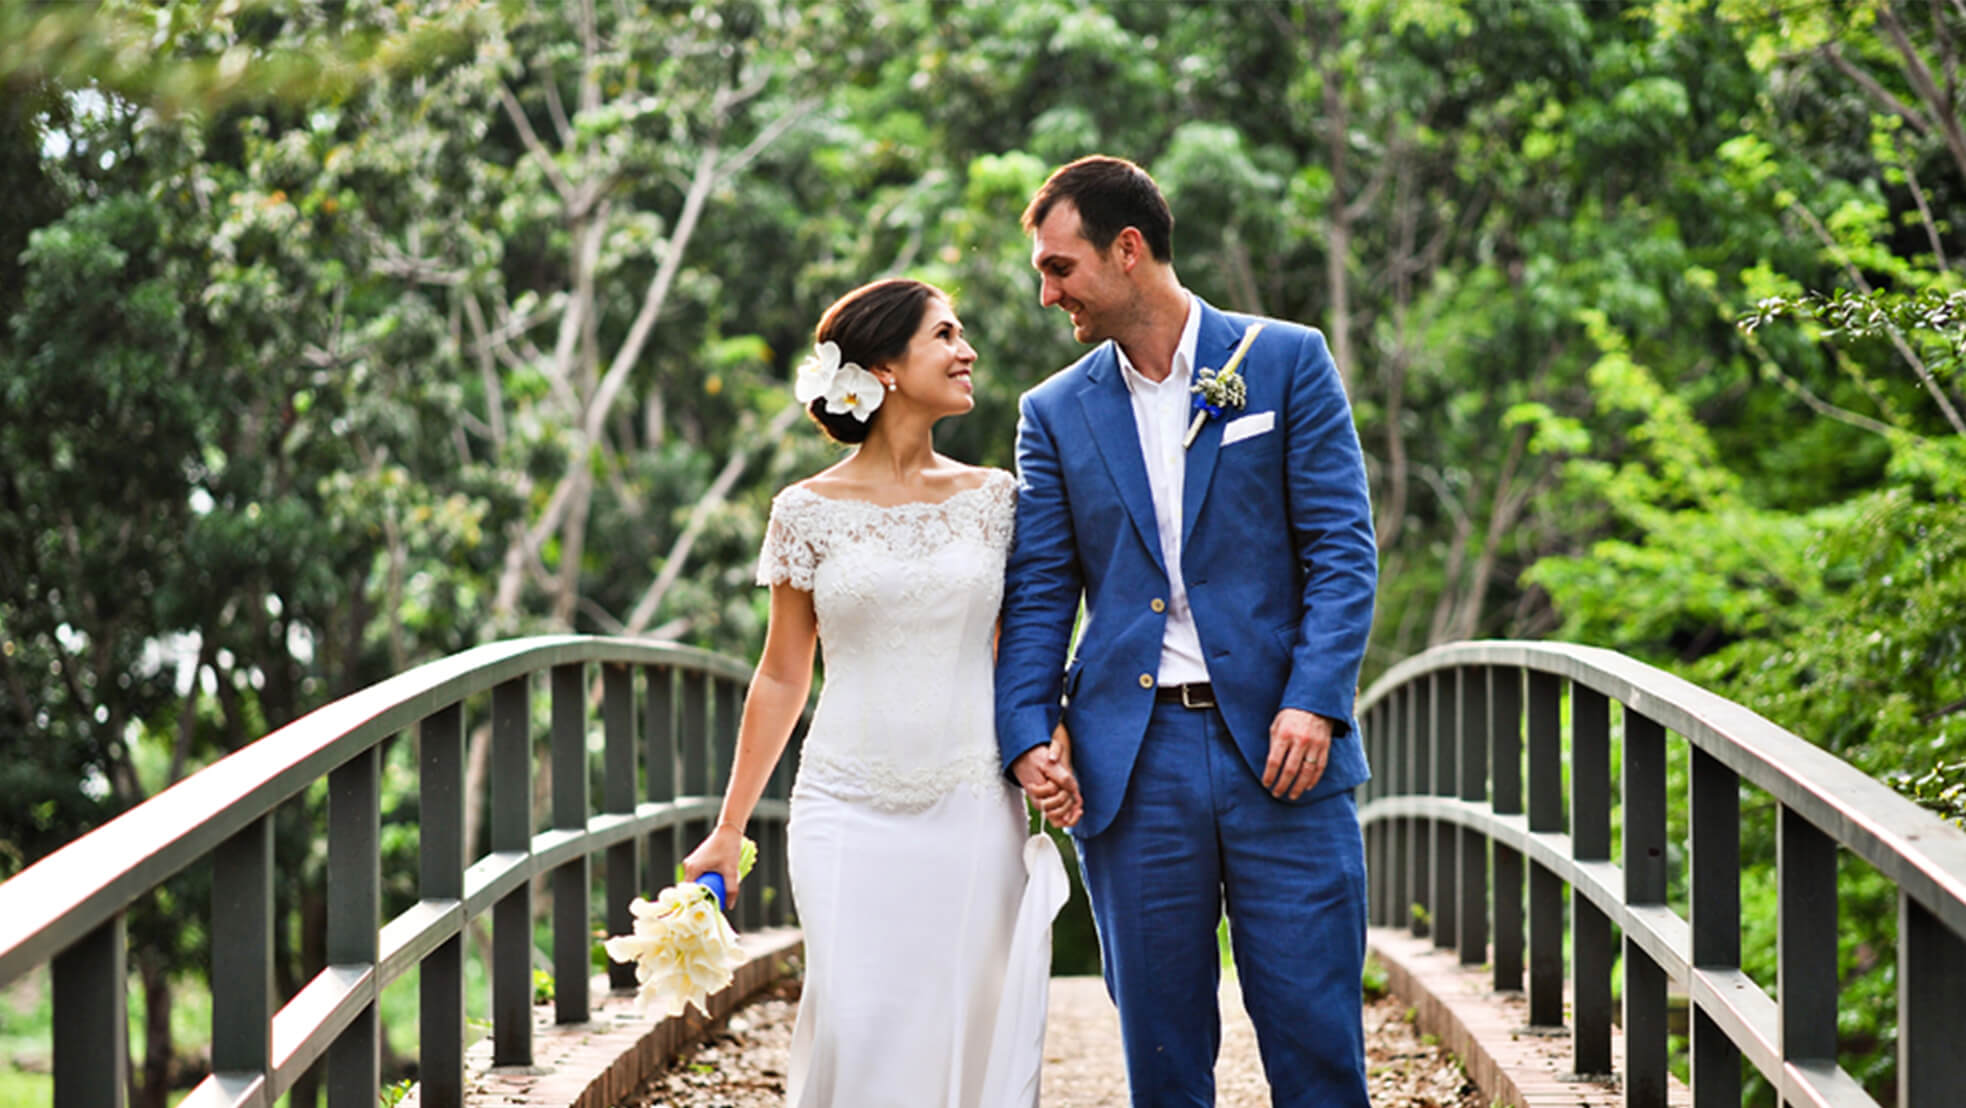 Sugar & Spice Events - Newlyweds walking on a bridge at Suffolk House Penang